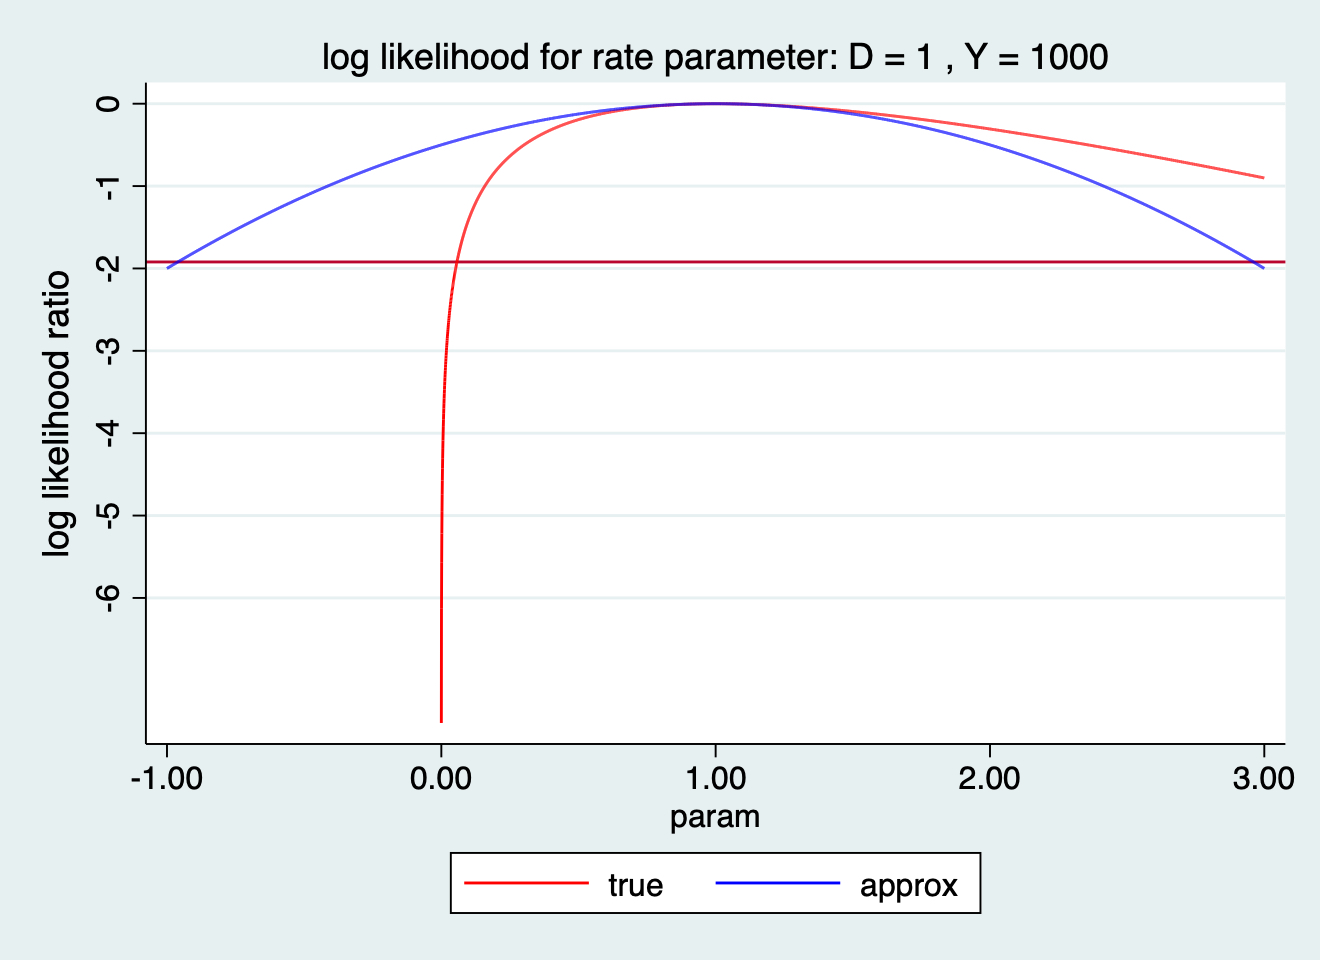 log likelihood ratio for rate paramter: D=1 Y=1000